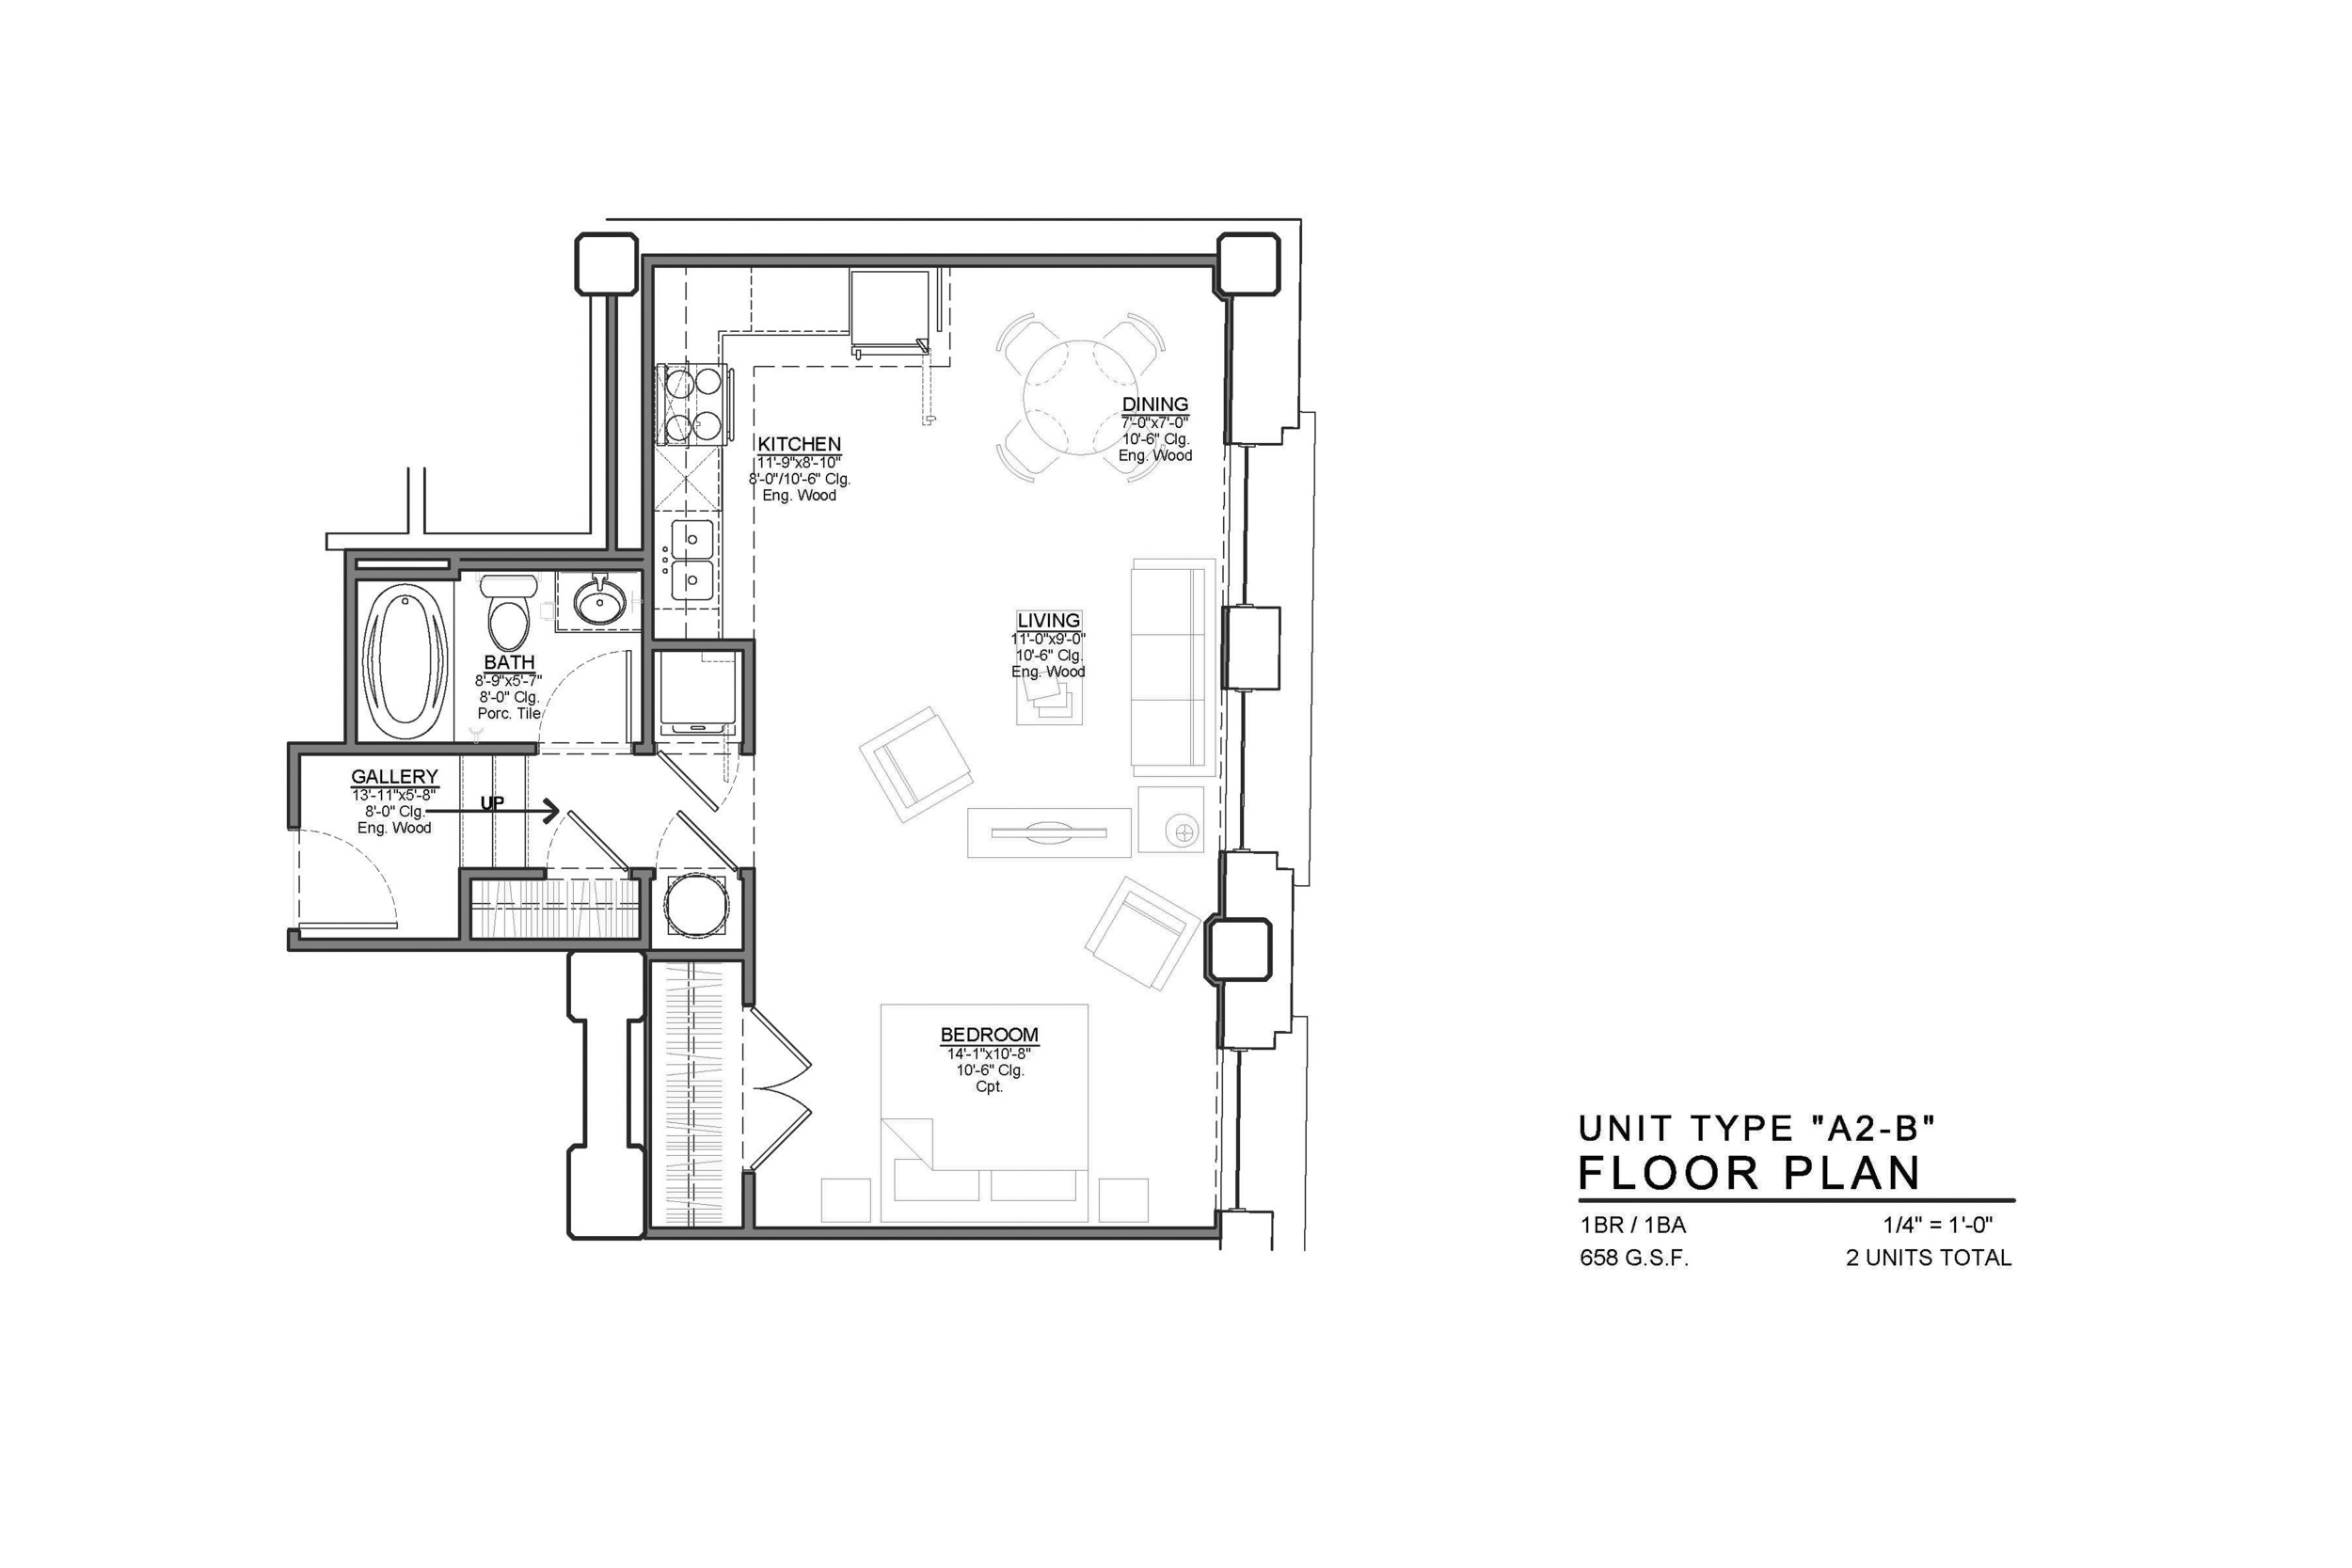 A2-B FLOOR PLAN: 1 BEDROOM / 1 BATH